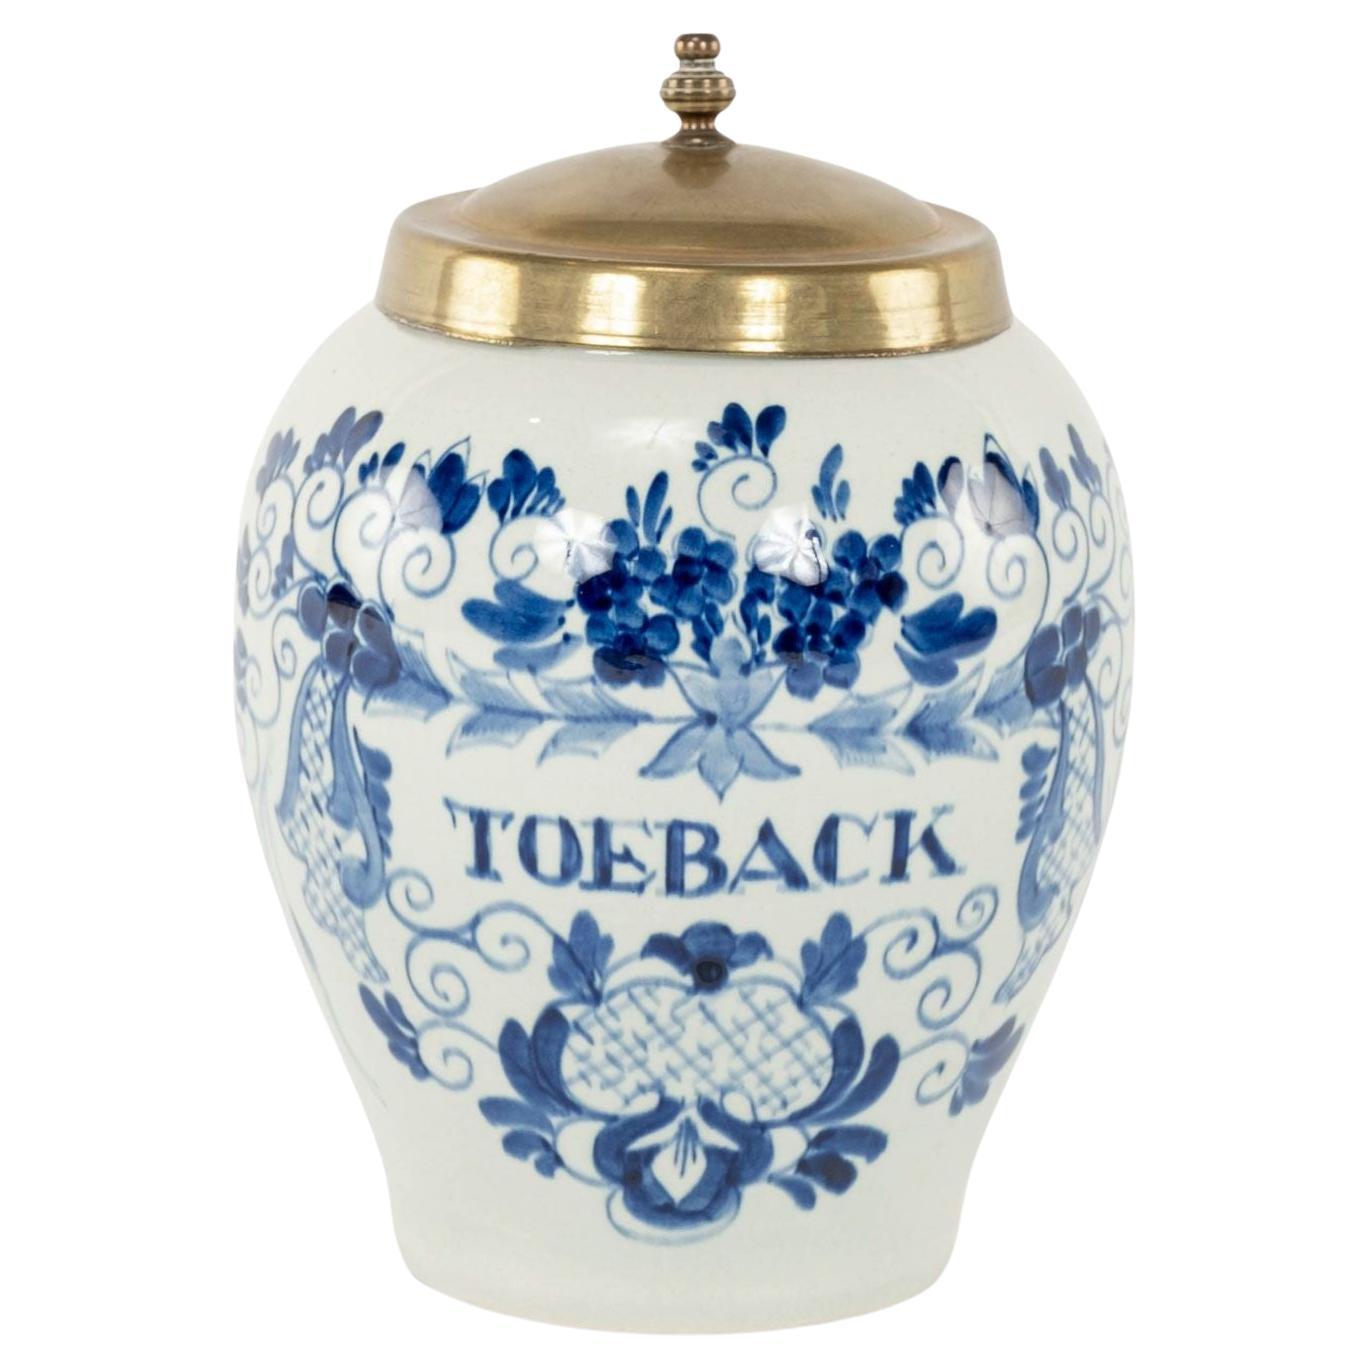 Delft Blau und Weiß "Toeback" Tabak JAR